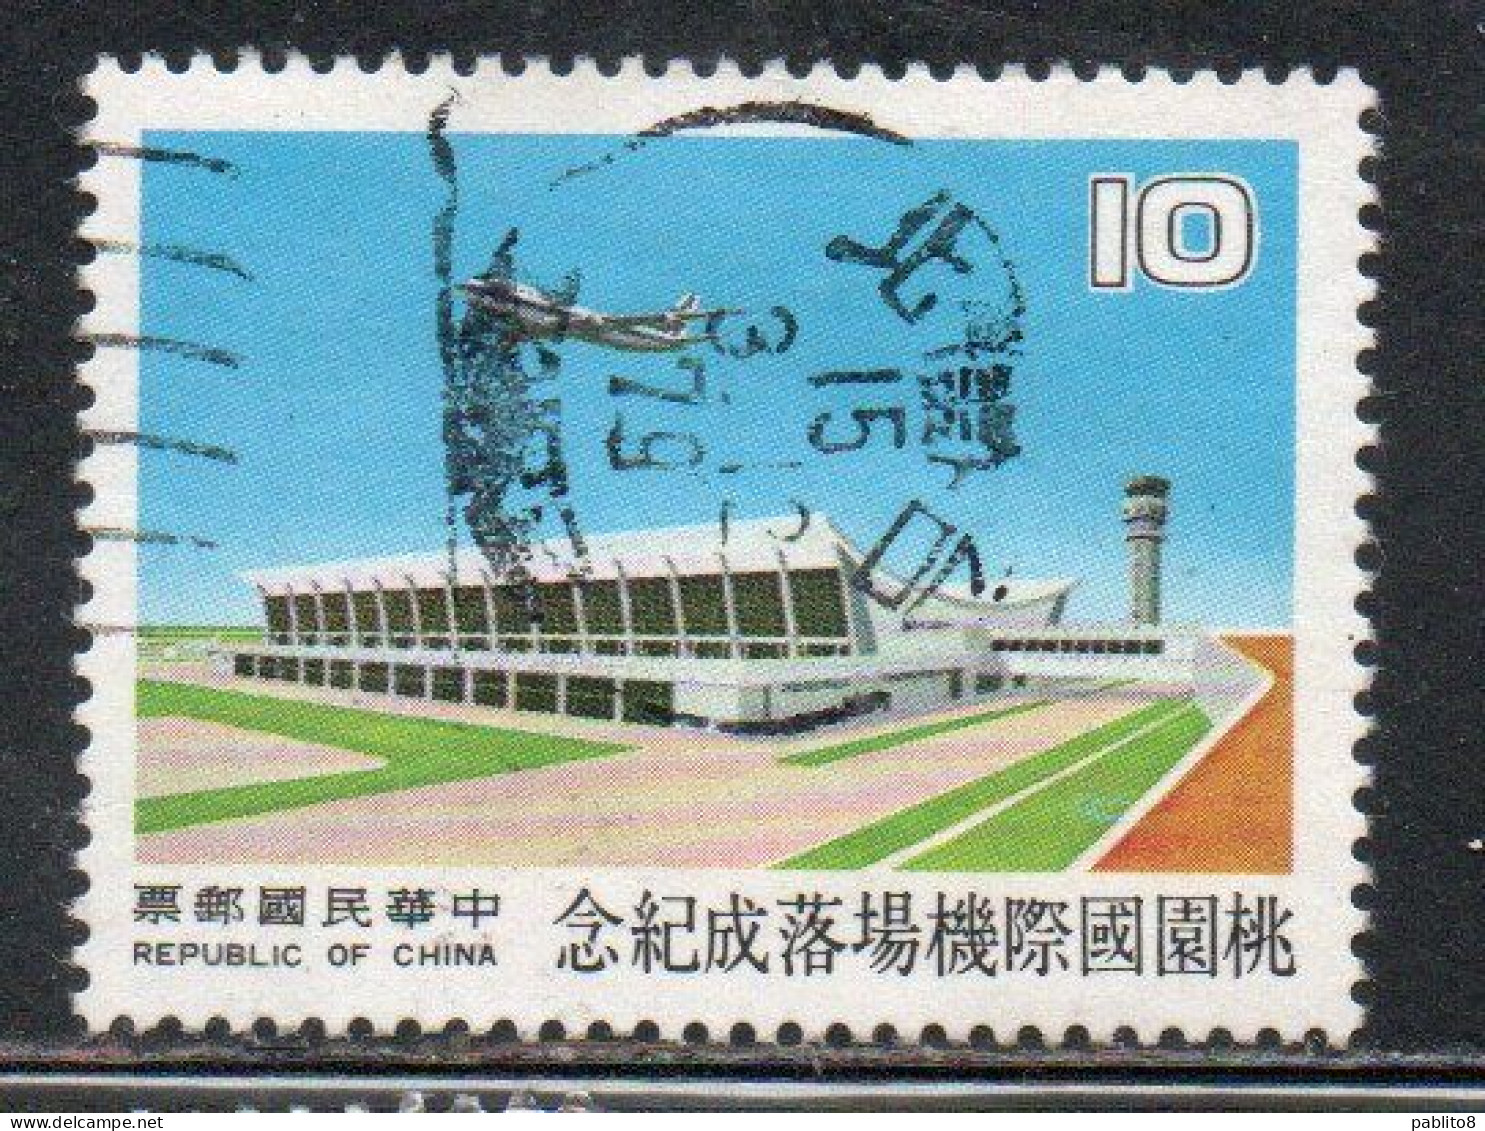 CHINA REPUBLIC CINA TAIWAN FORMOSA 1978 TAOYUAN AIRPORT PASSENGER TERMINAL CONTROL TOWER 10$ USED USATO OBLITERE - Gebraucht